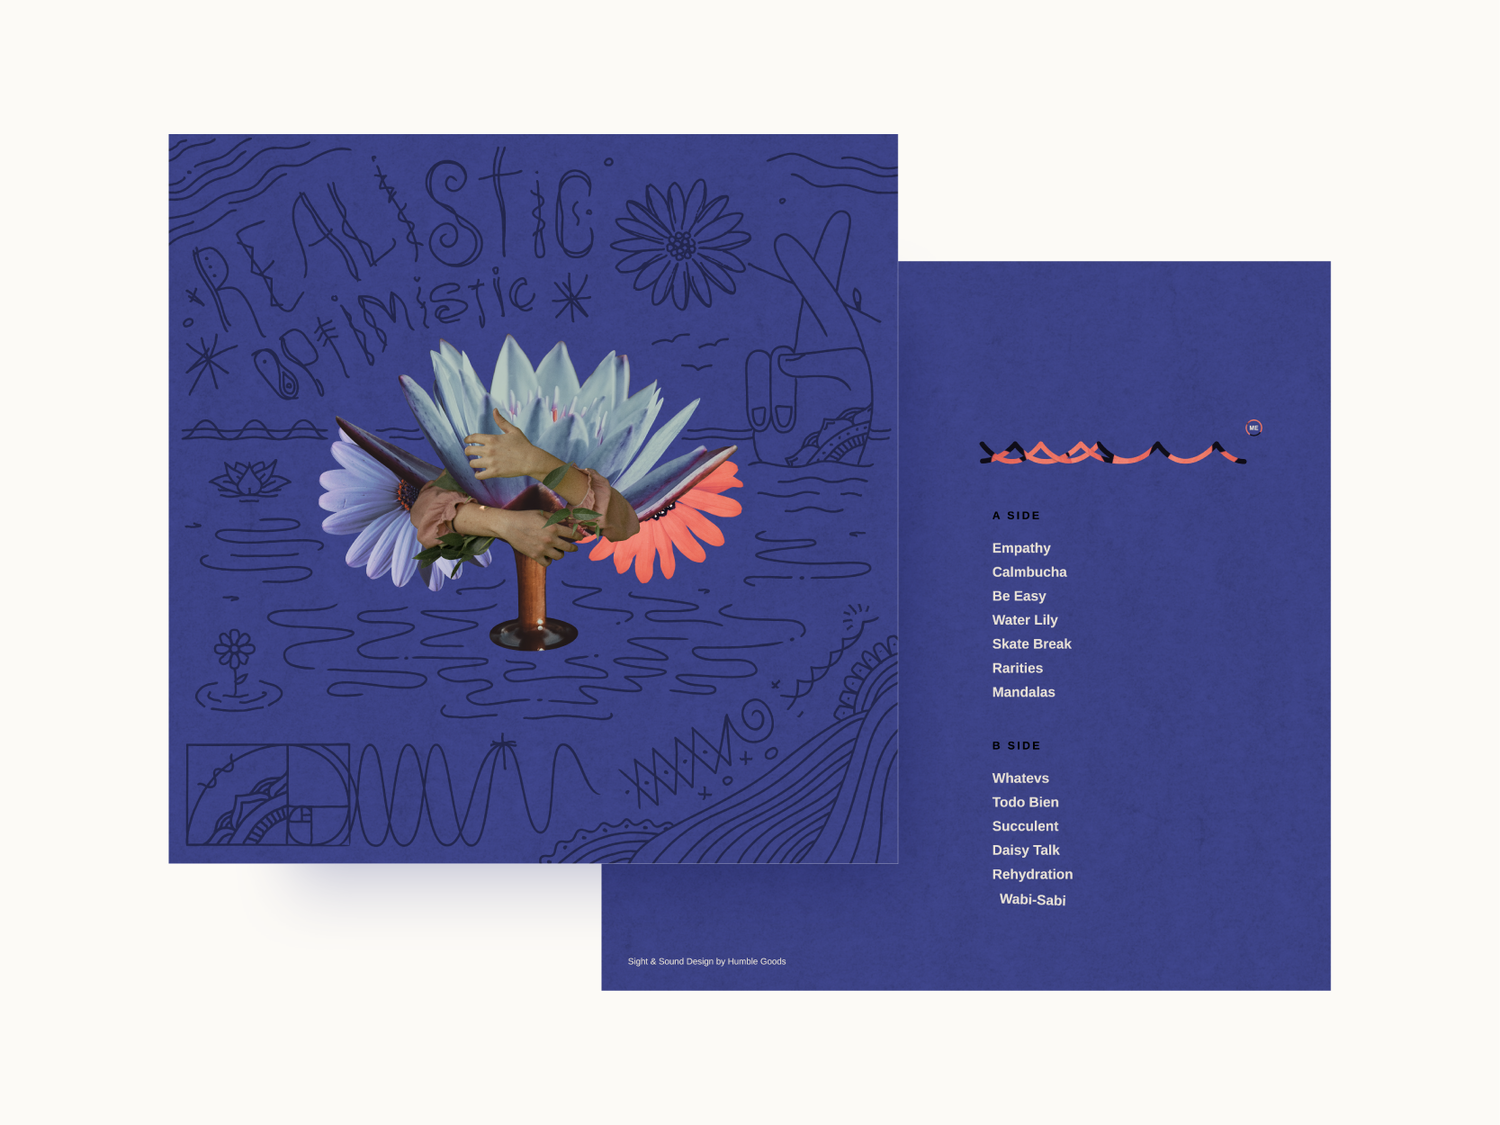 Humble+Goods+Design_2019_Album+Sleeve+Design-01.png